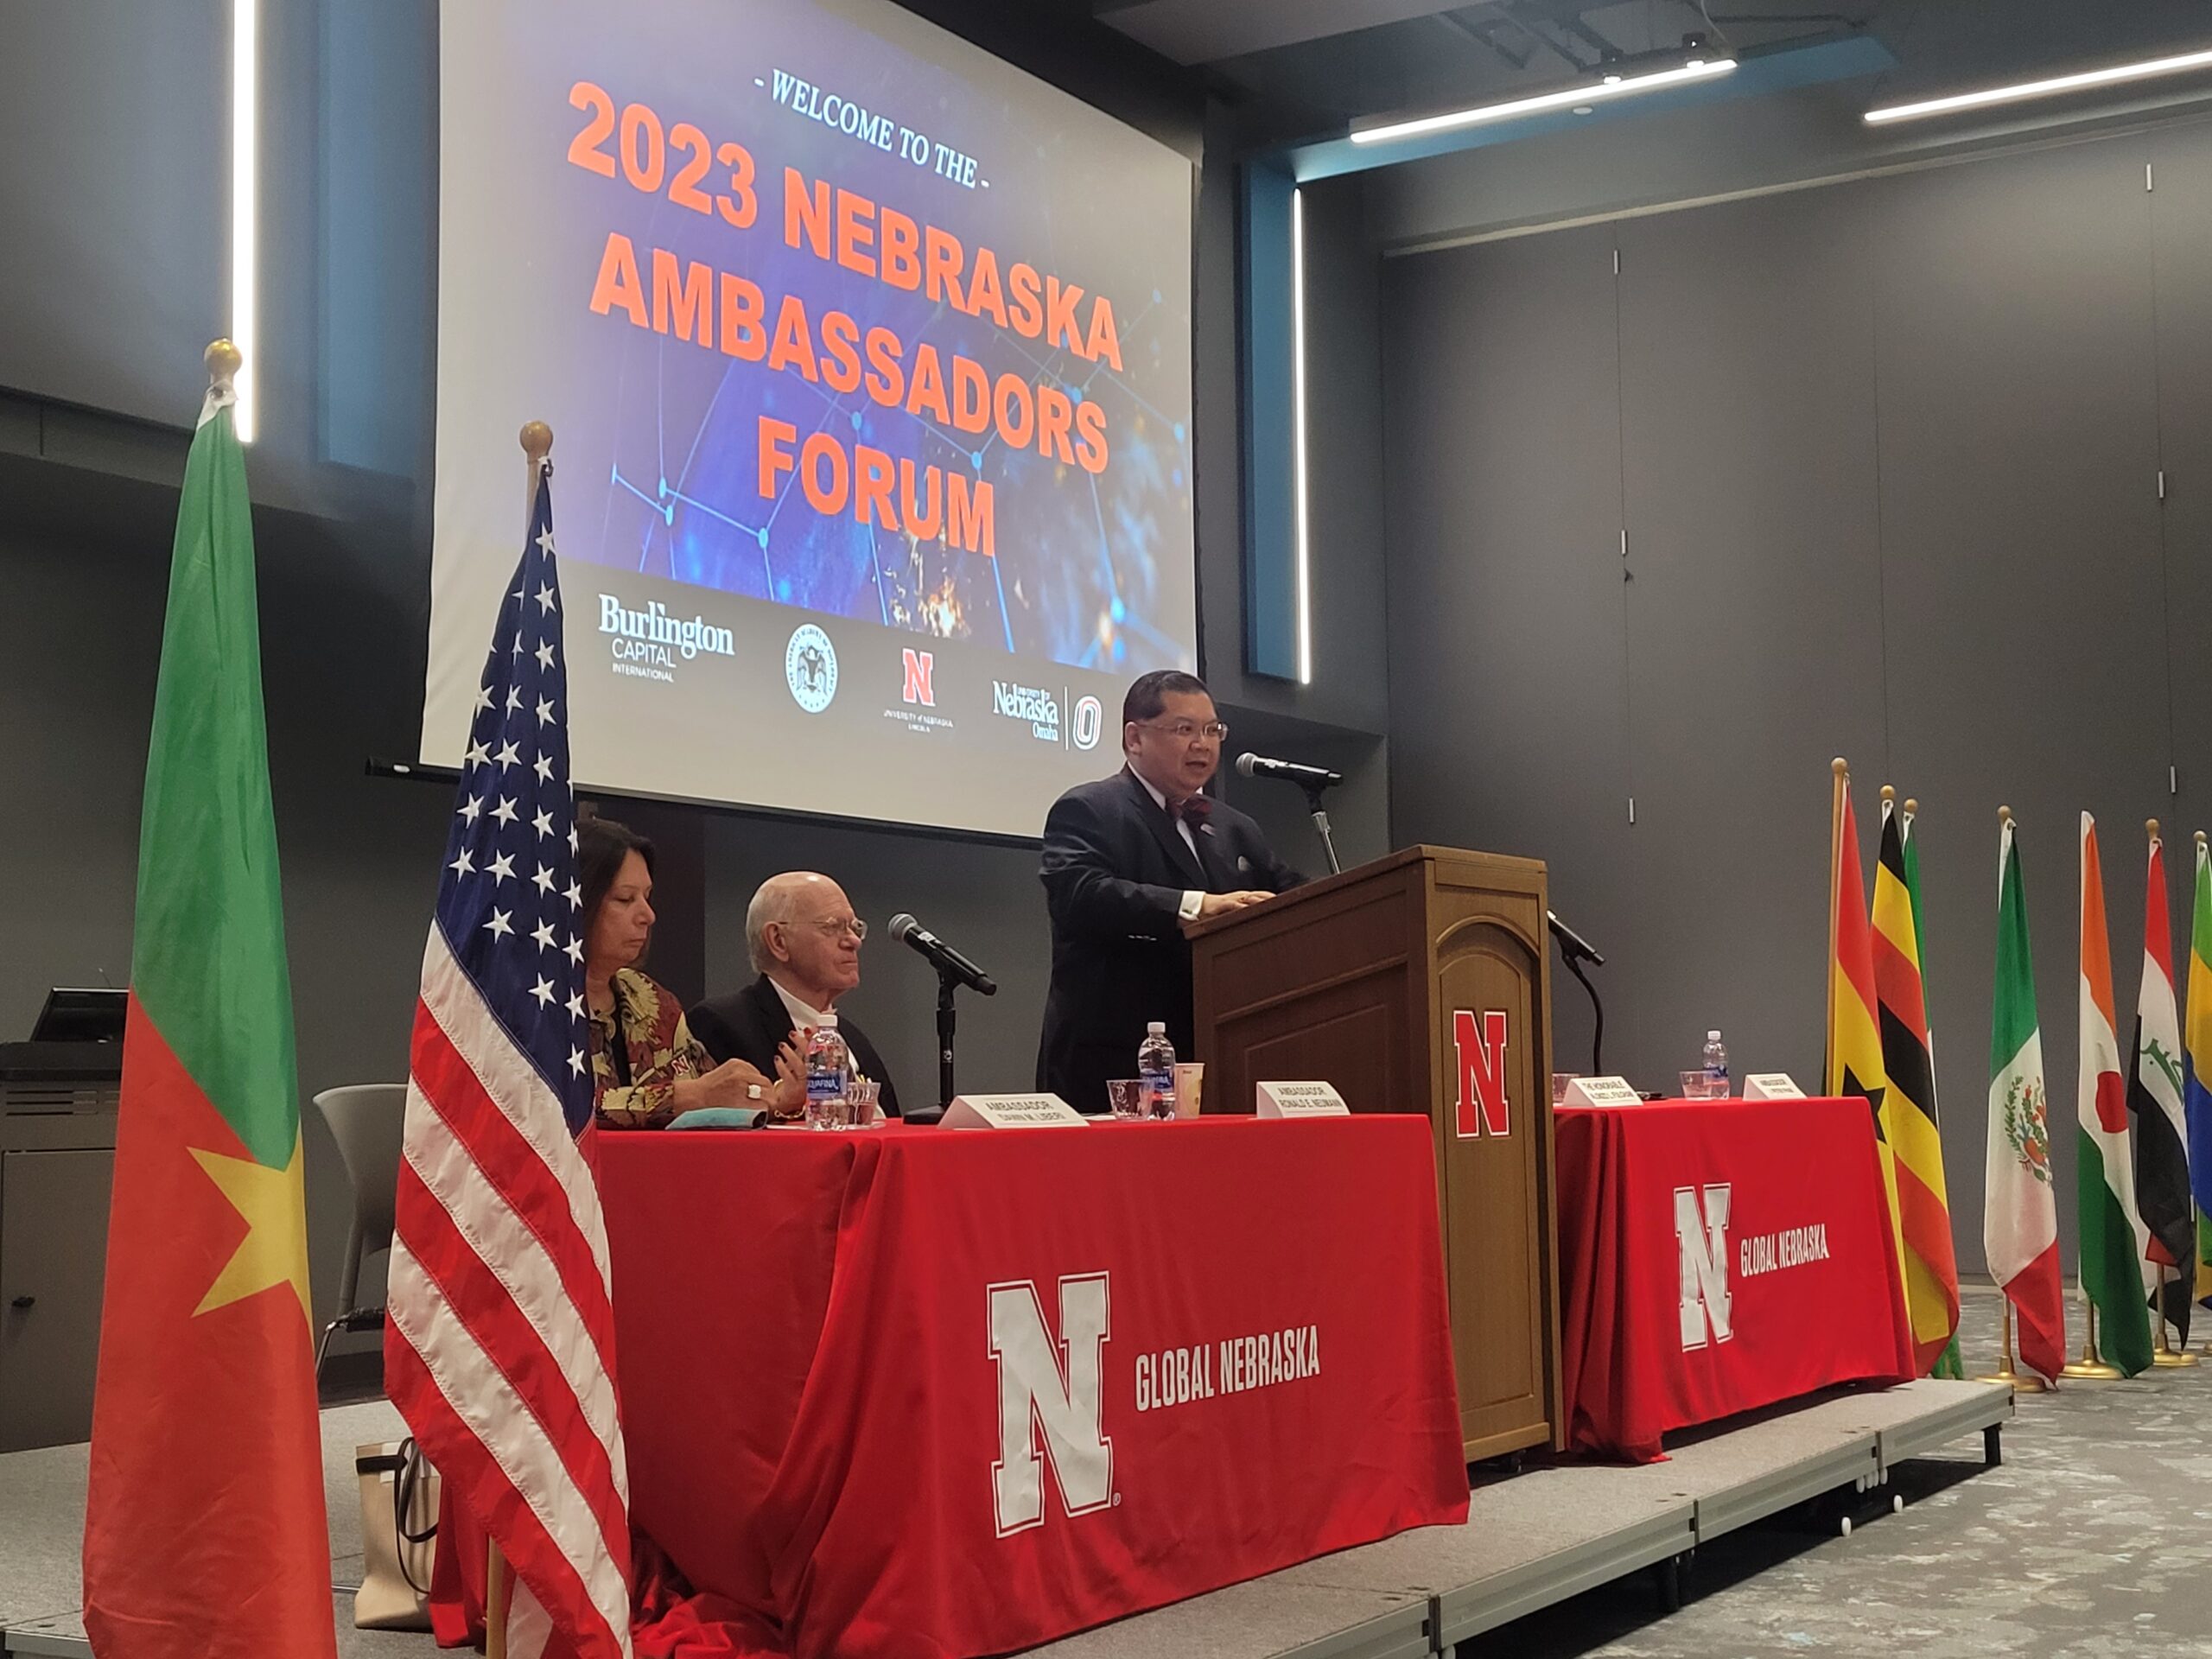 Nebraska Ambassadors Forum 